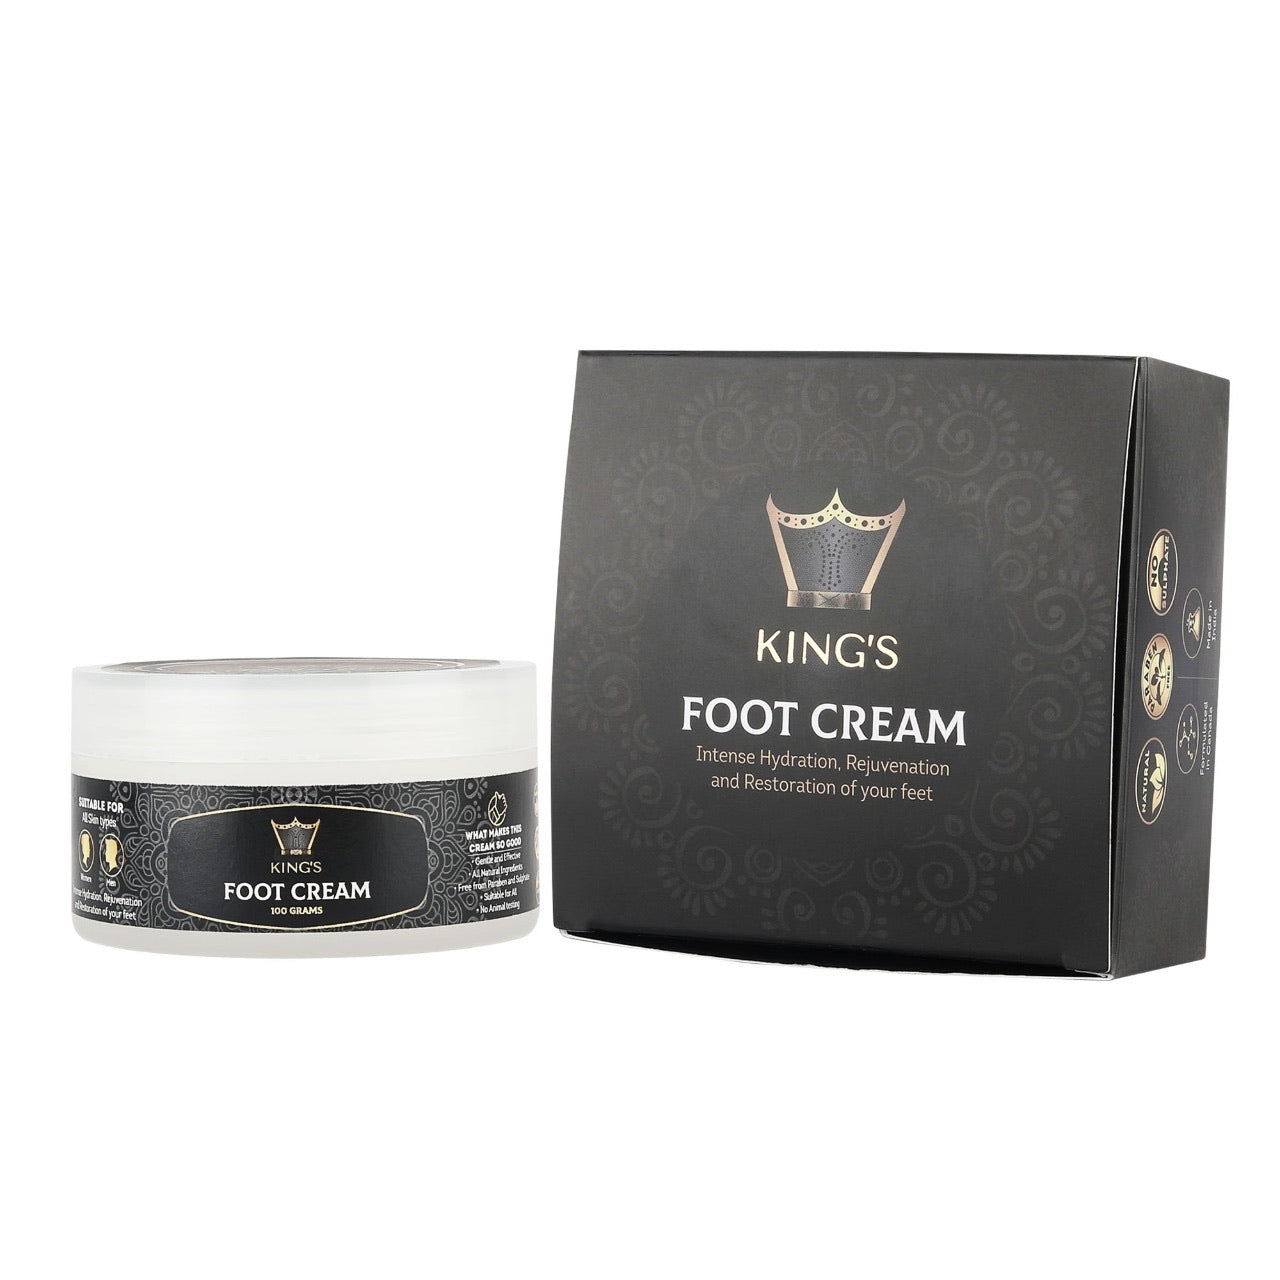 KING'S Foot Cream